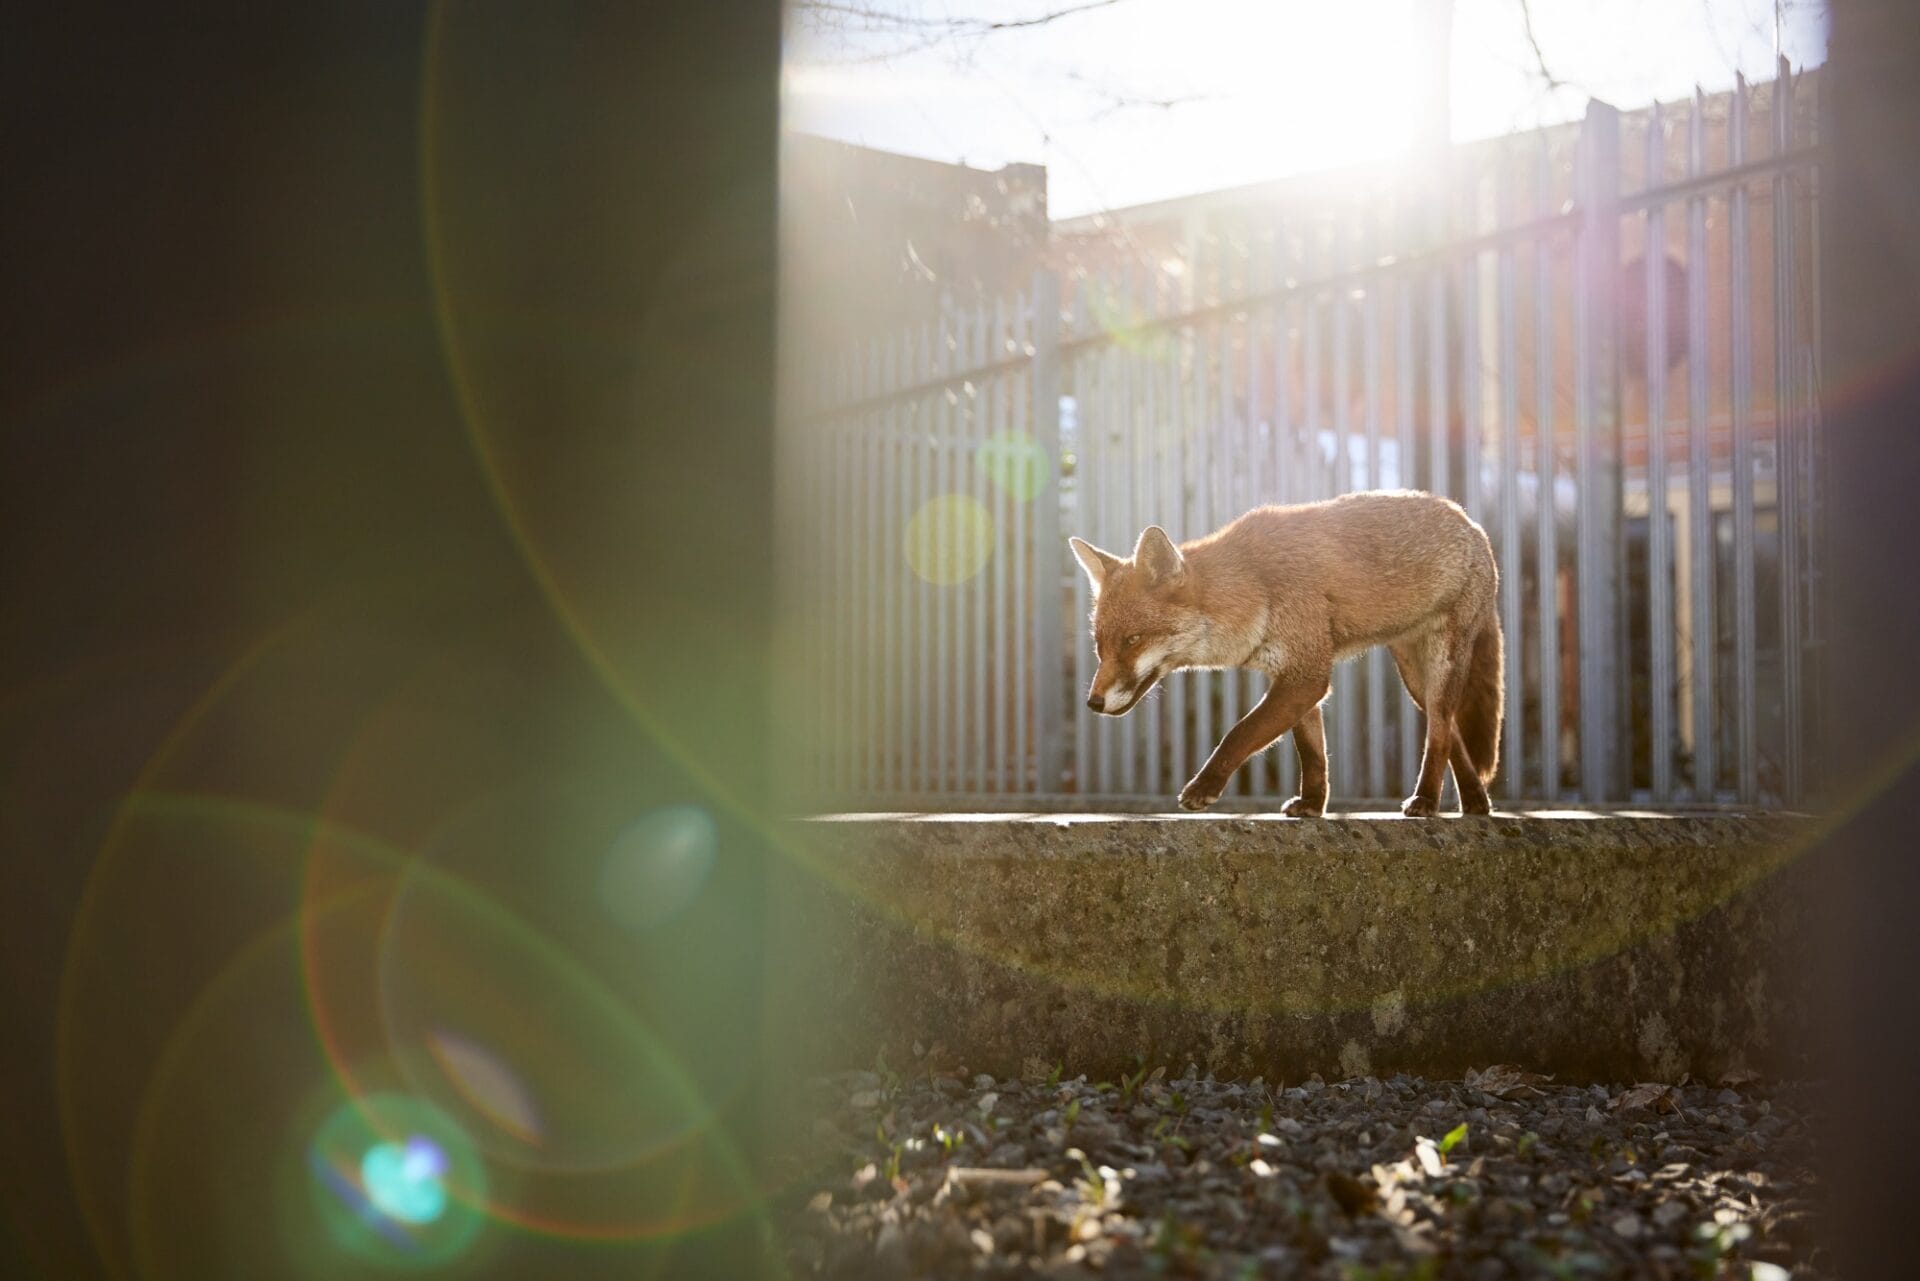 a fox wanders near a fence in an urban area